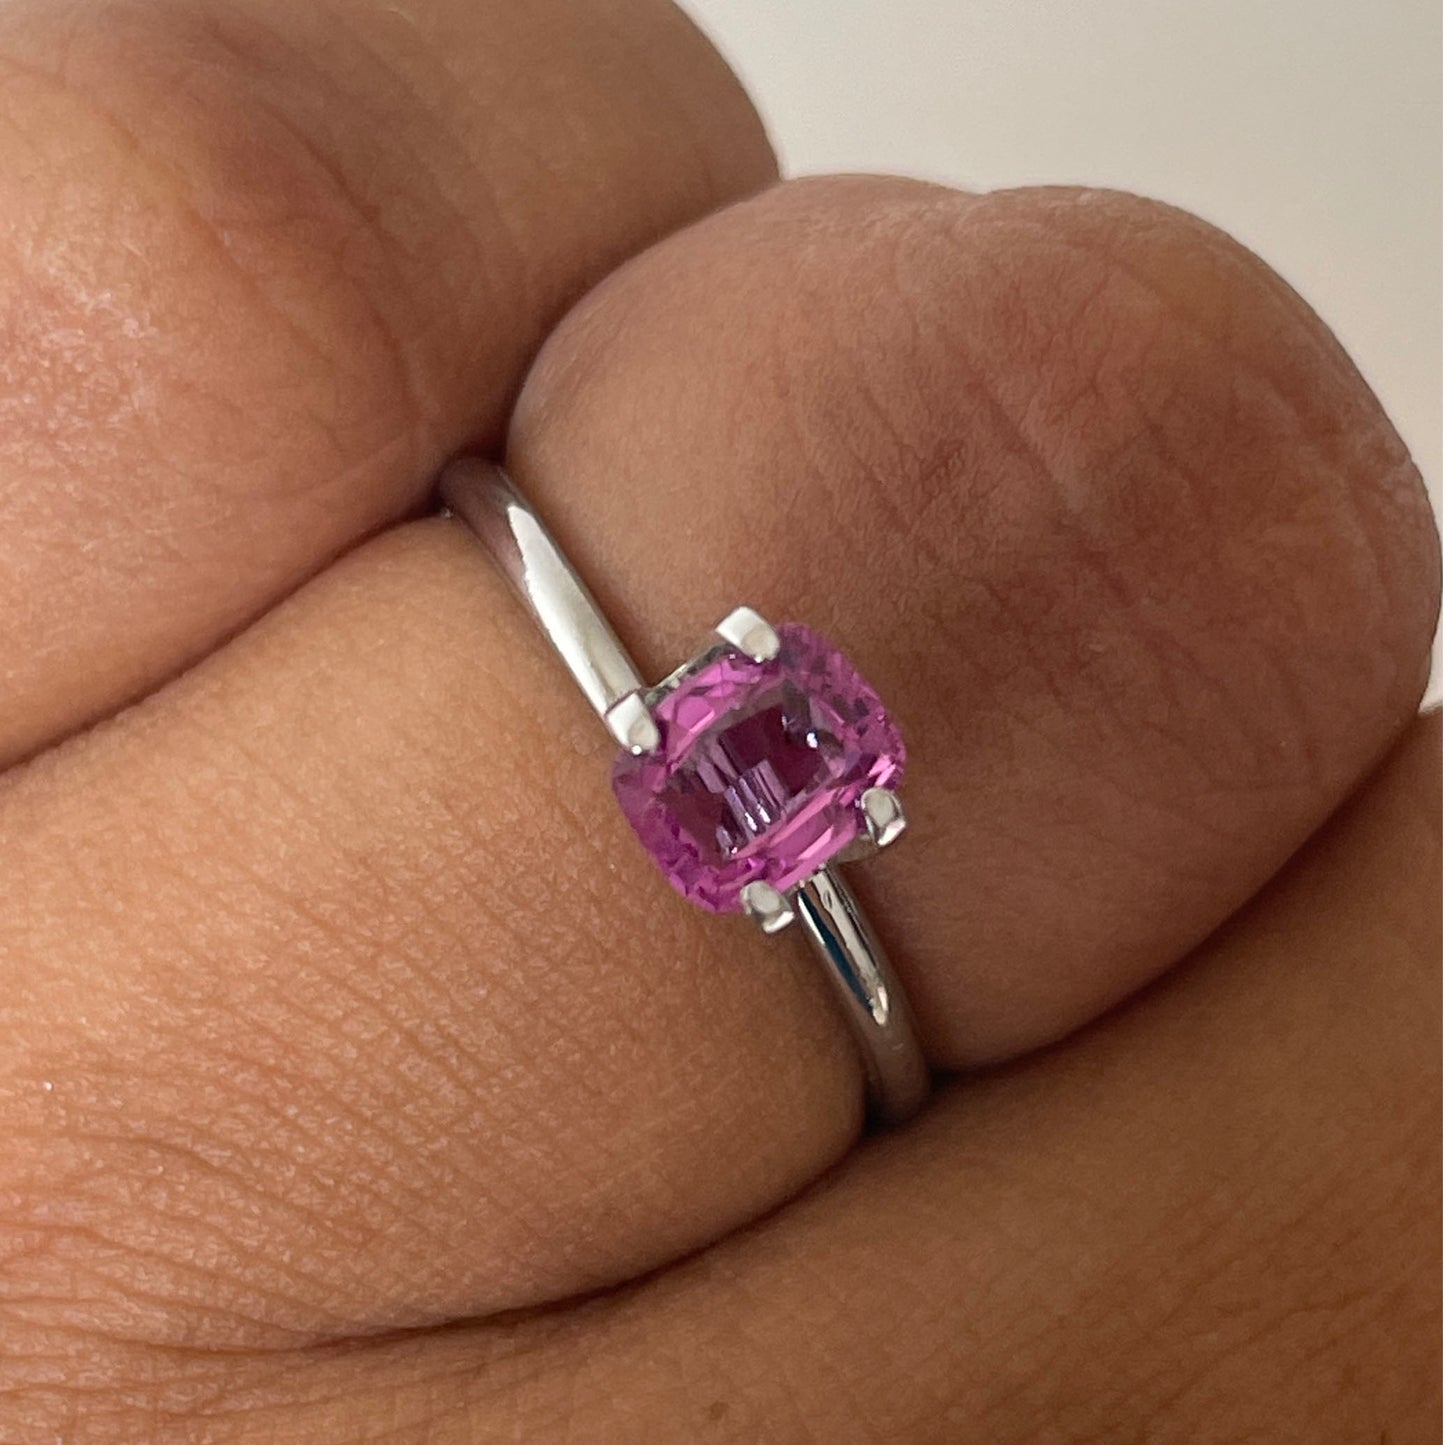 1.02 Natural earth mined Pink Sapphire, purplish Pink Sapphire